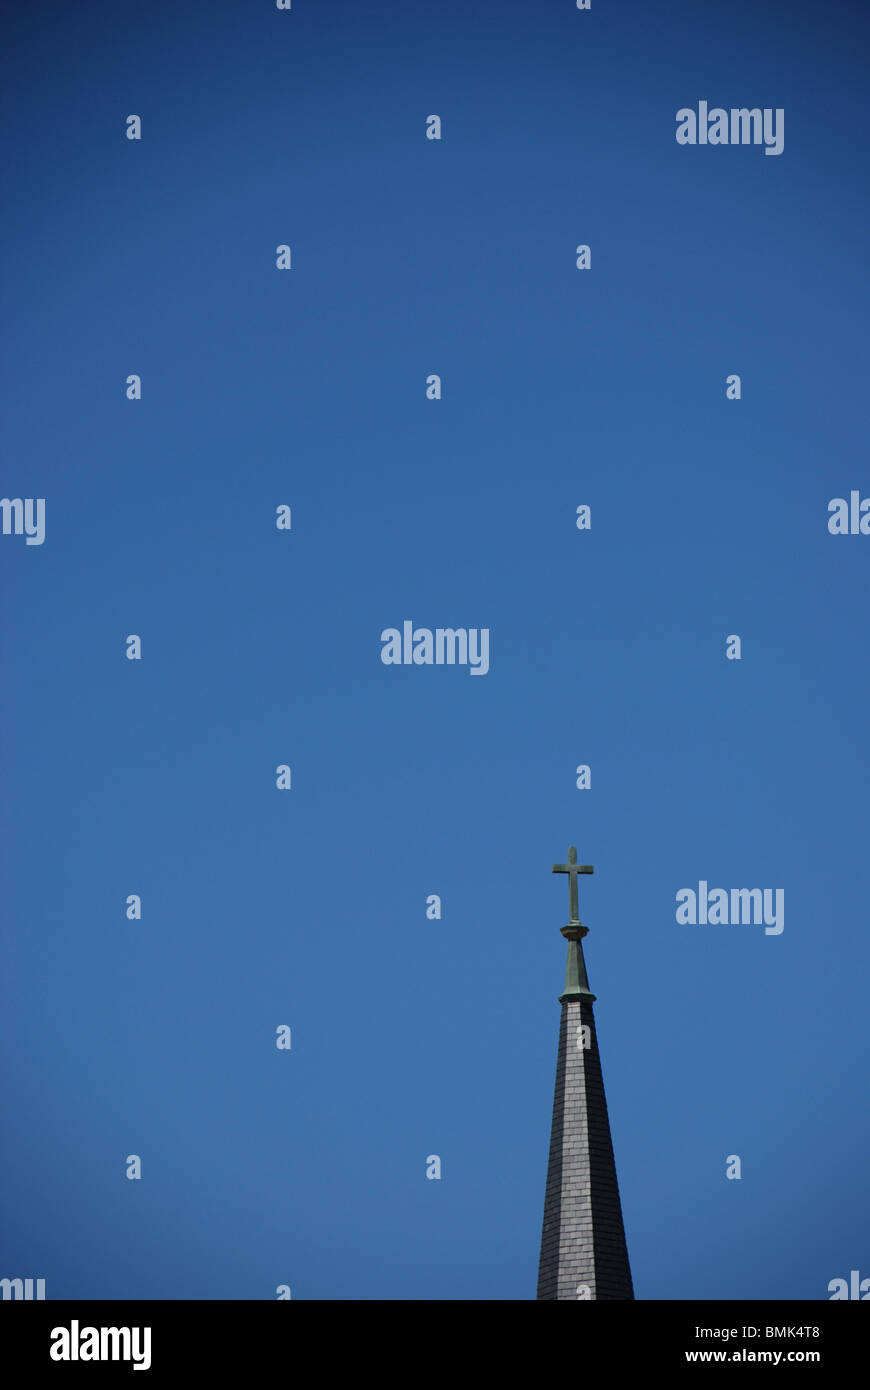 Church steeple with cross against blue sky. Stock Photo